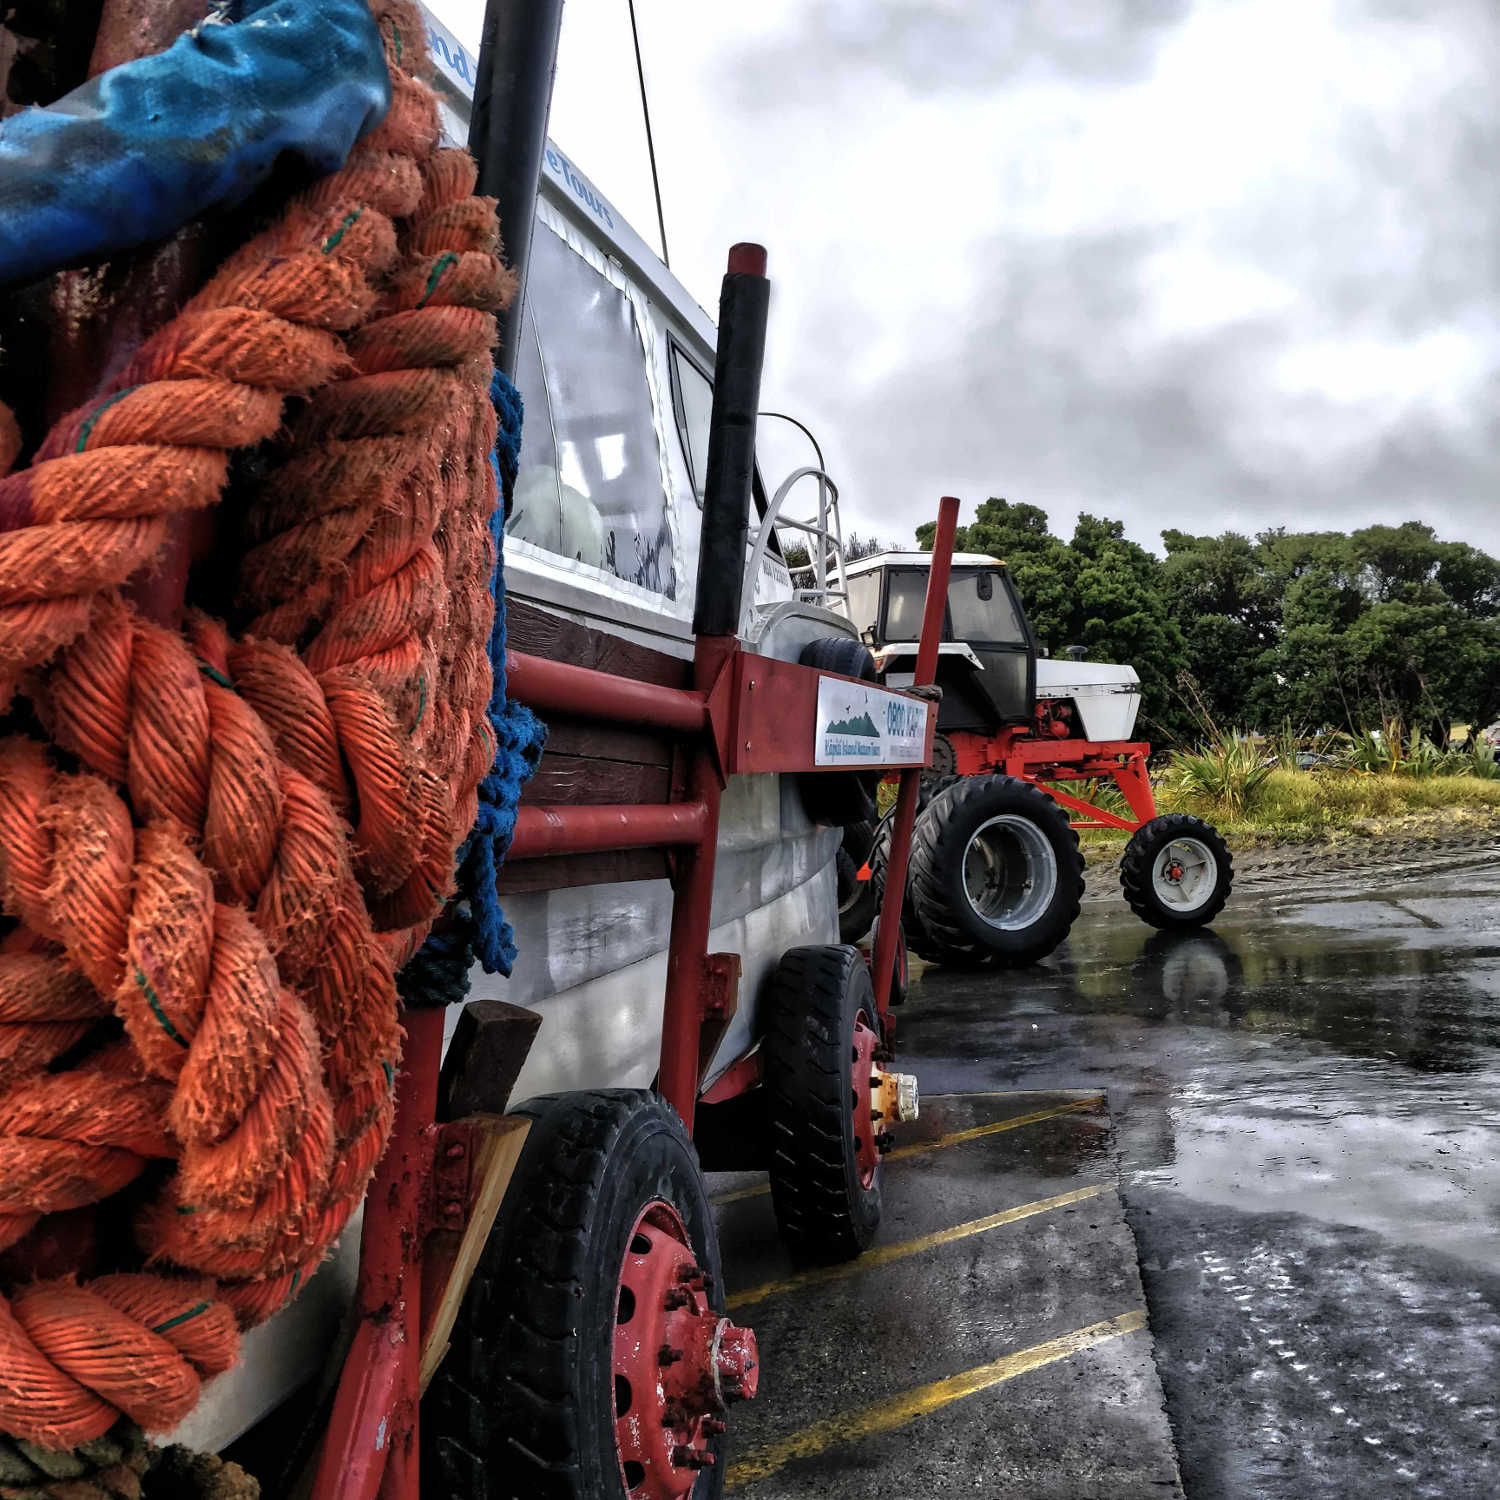 Kapiti Island departure via tractor assistance to launch island boat, Wellington, New Zealand